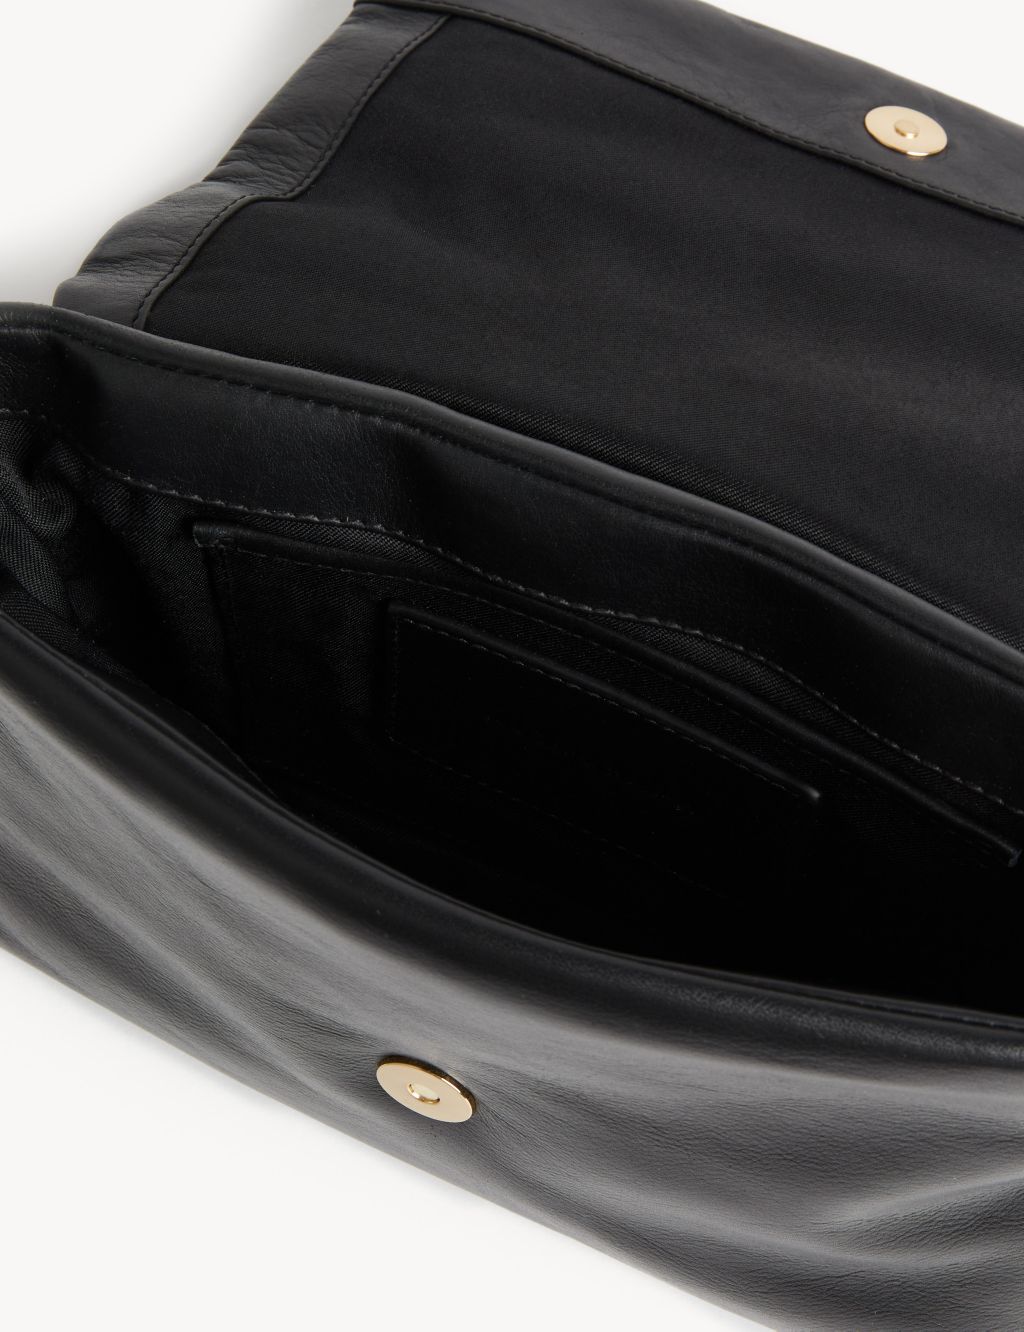 Leather Top Handle Cross Body Bag image 3